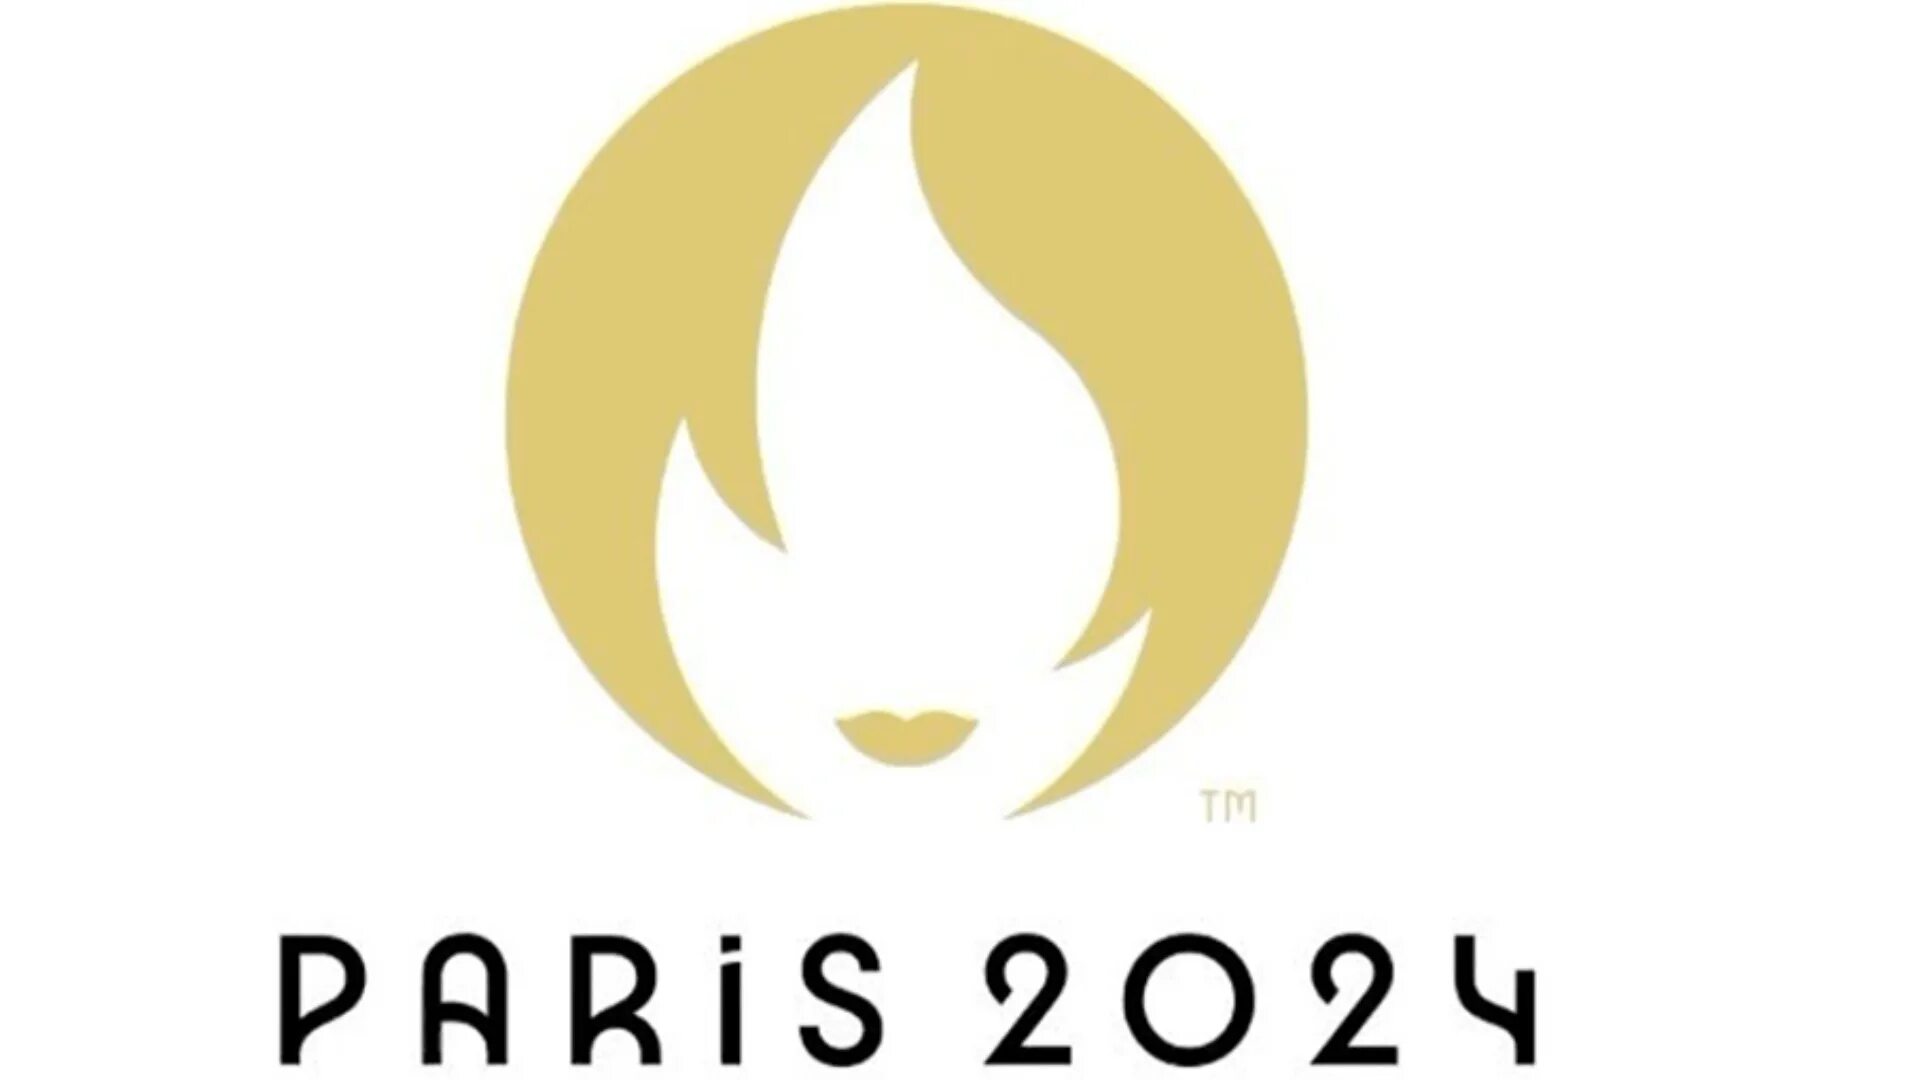 Парк лого 2024. Эмблема олимпиады 2024. Символ Олимпийских игр 2024 в Париже. Логотип олимпиады Париж.